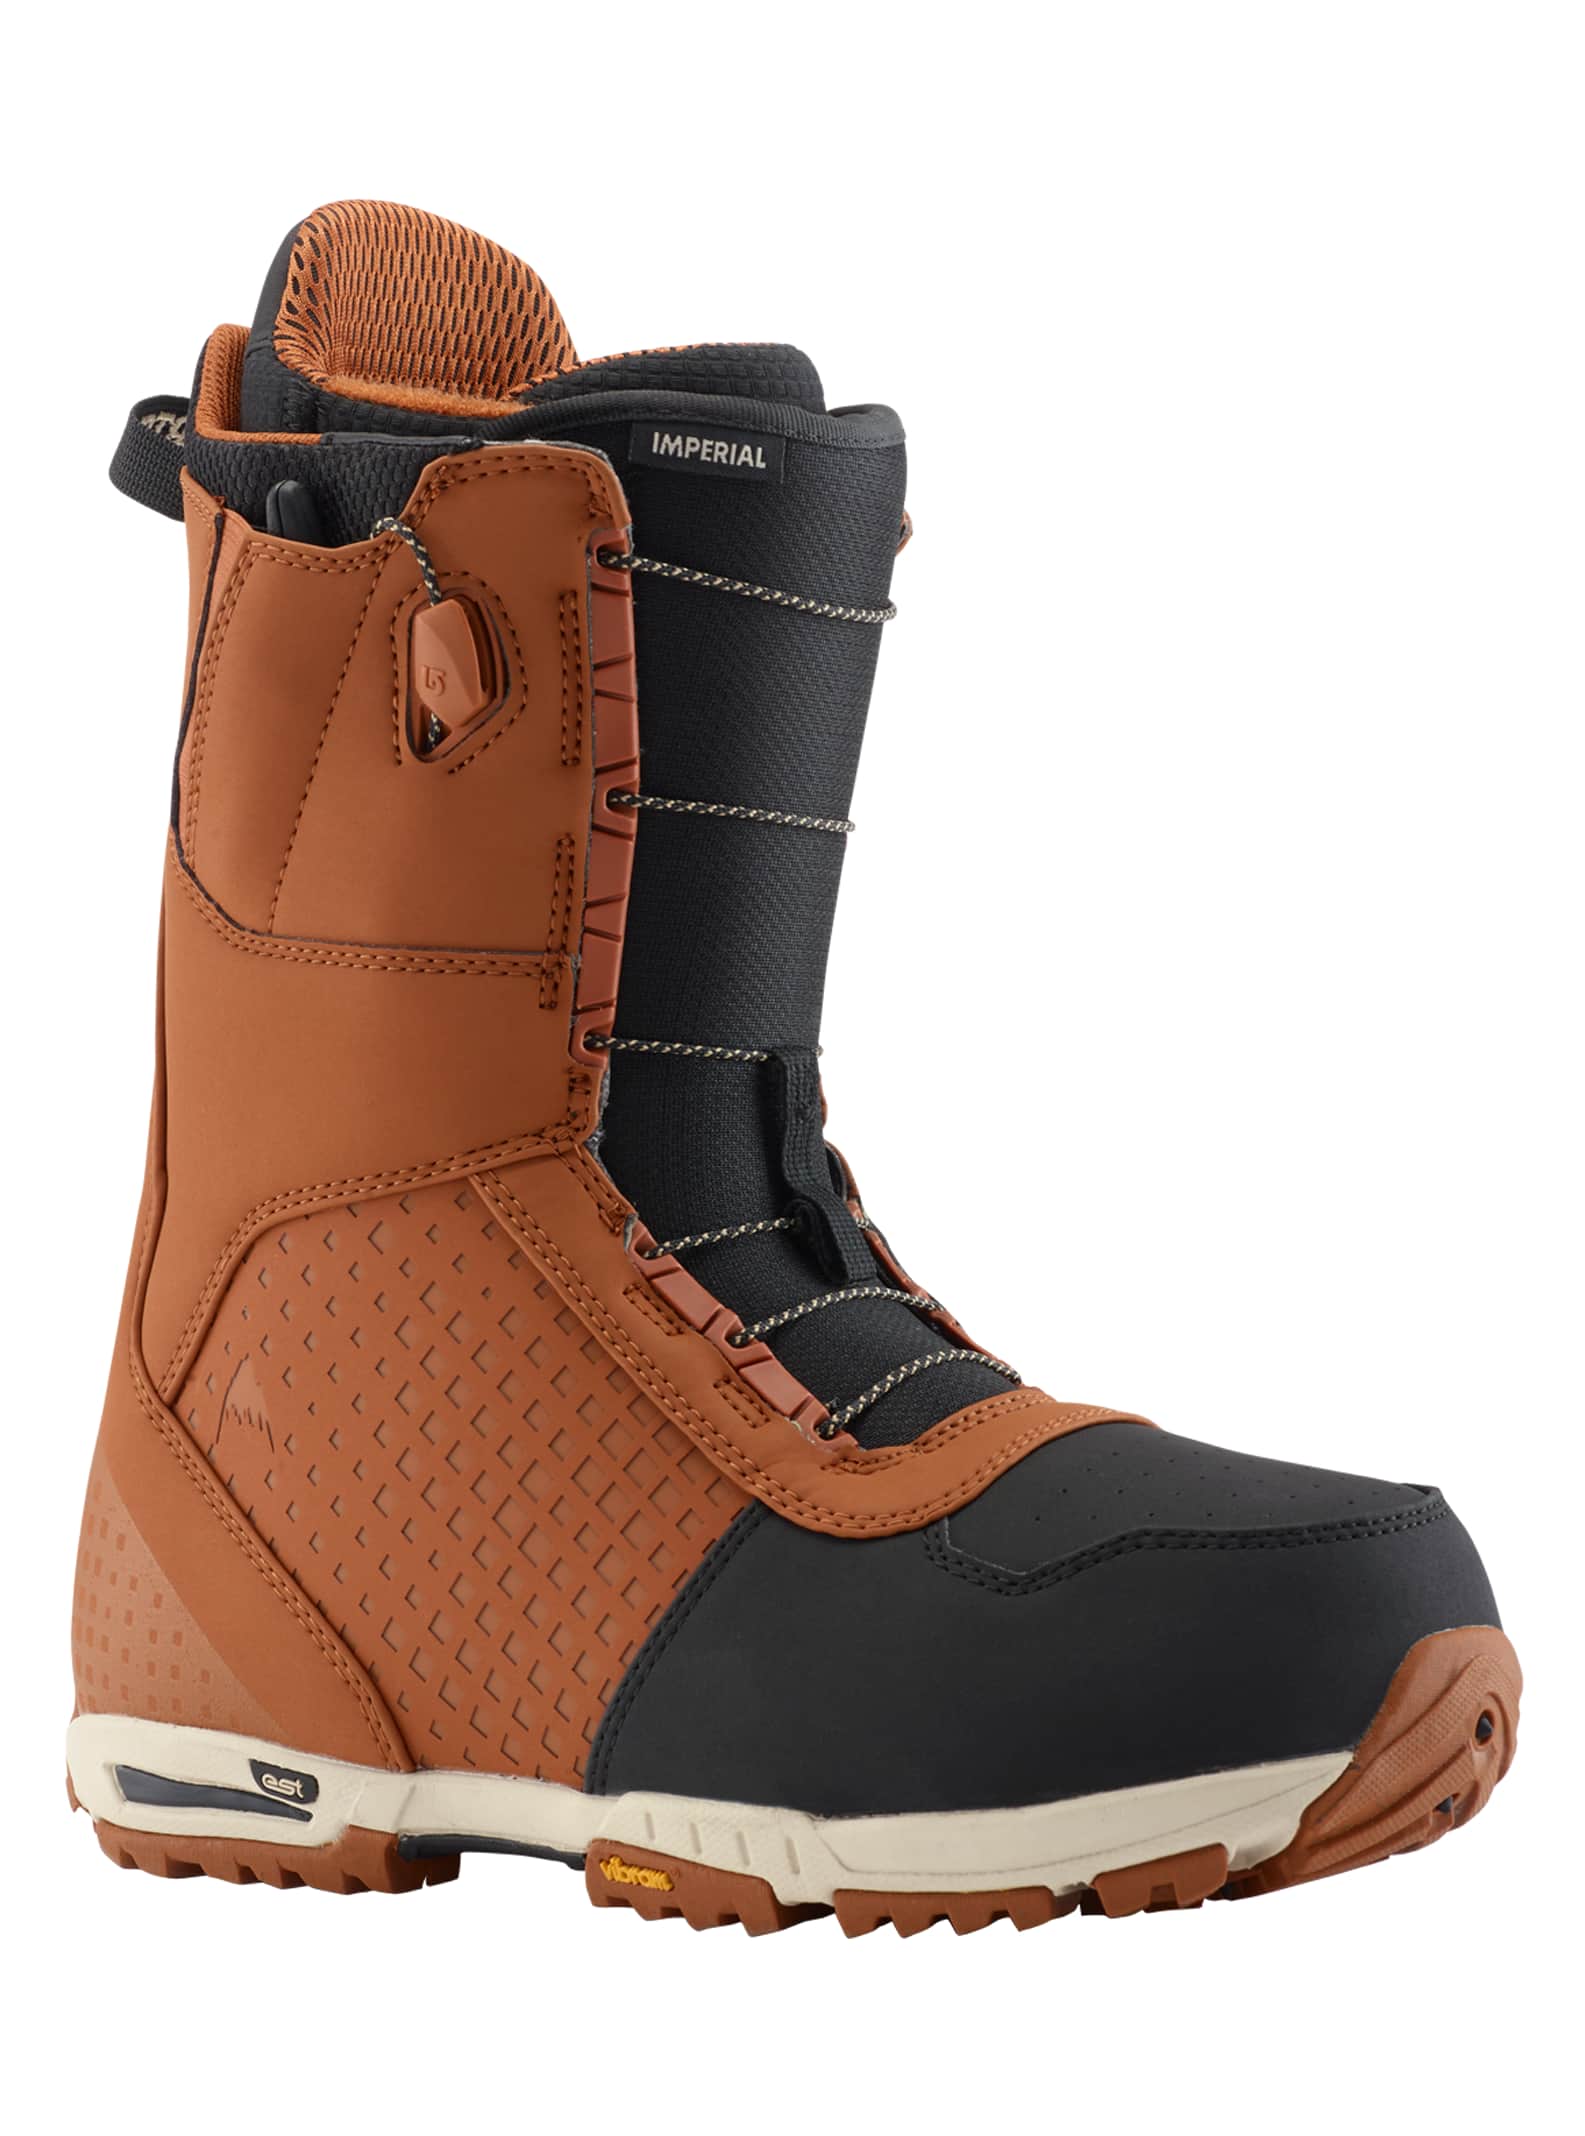 Burton - Boots de snowboard Imperial homme, Brown / Black, 10